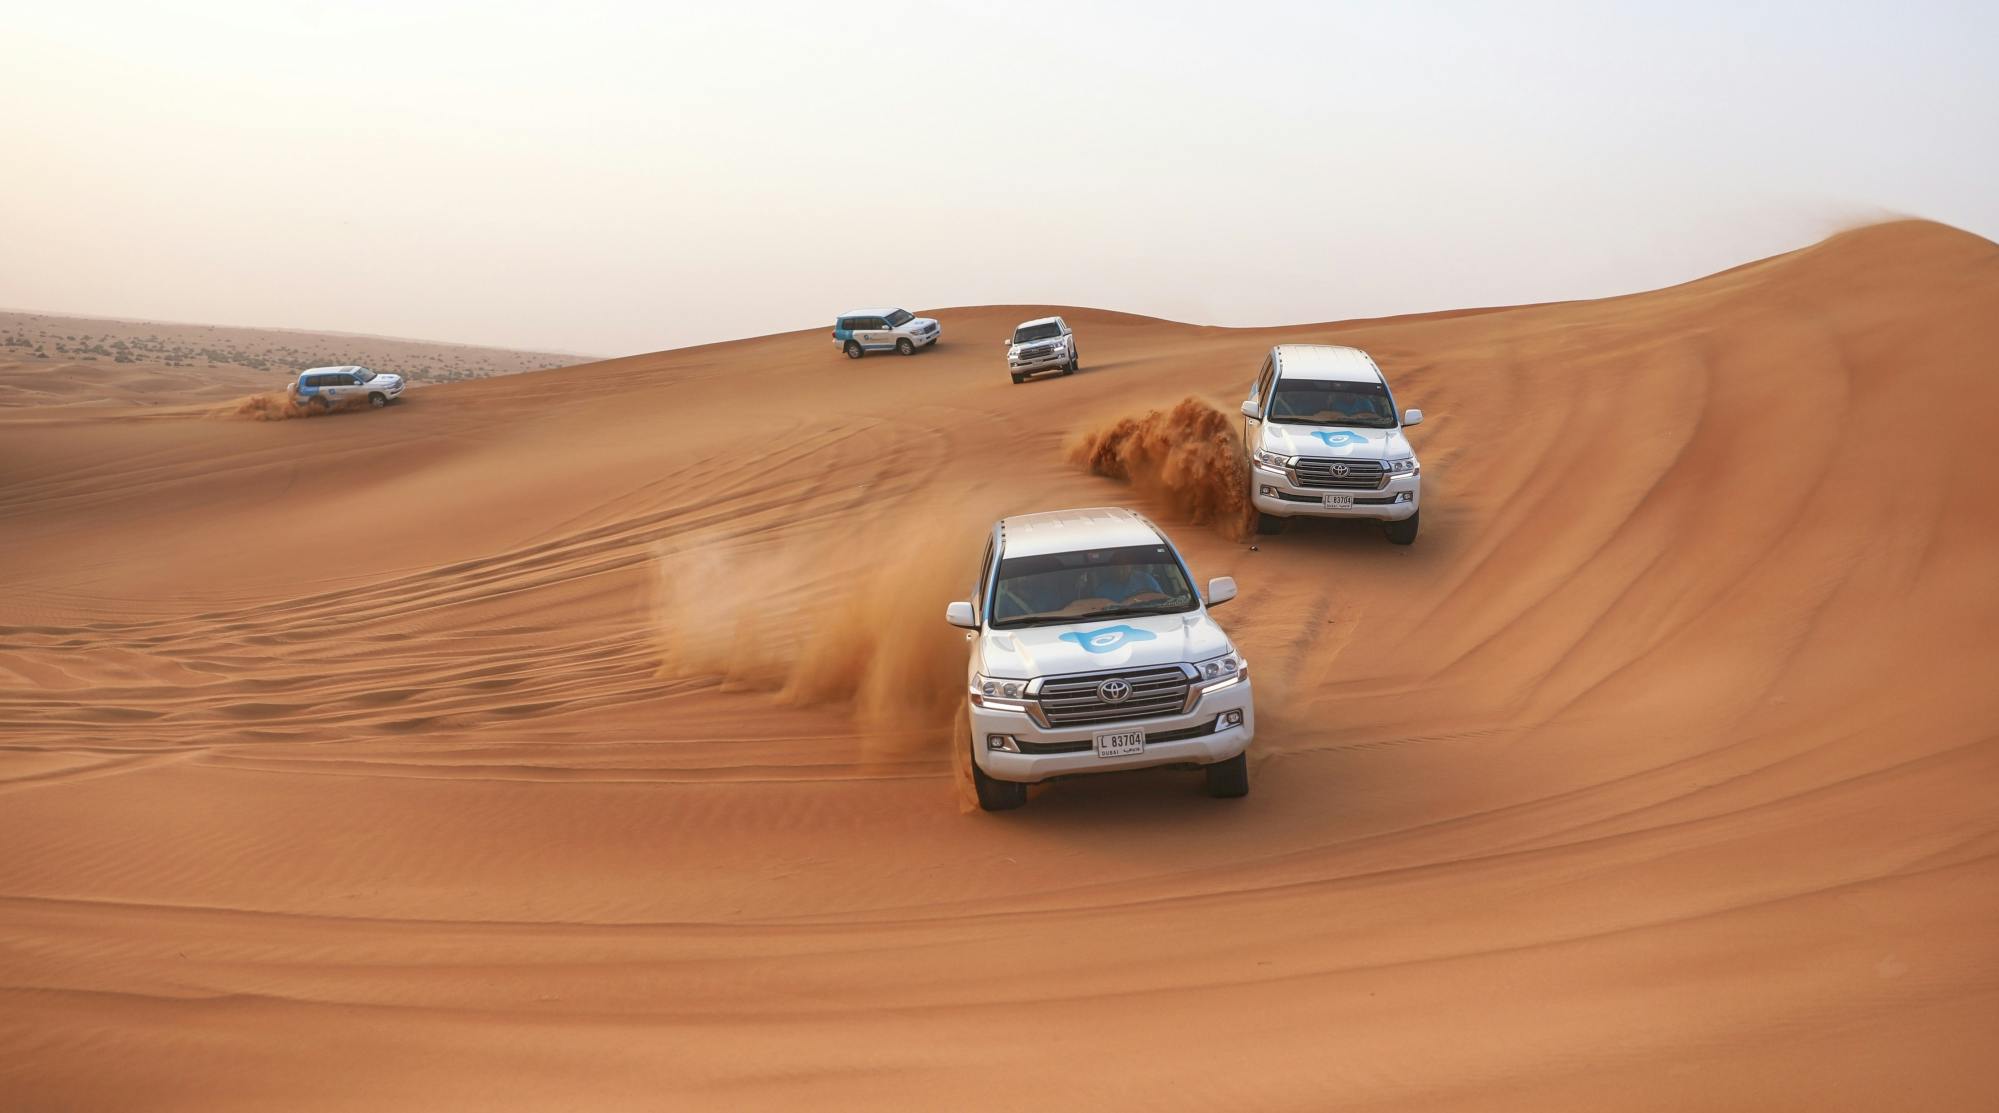 Safari mattutino nel deserto di Dubai con dune bashing, sandboarding, giro in cammello